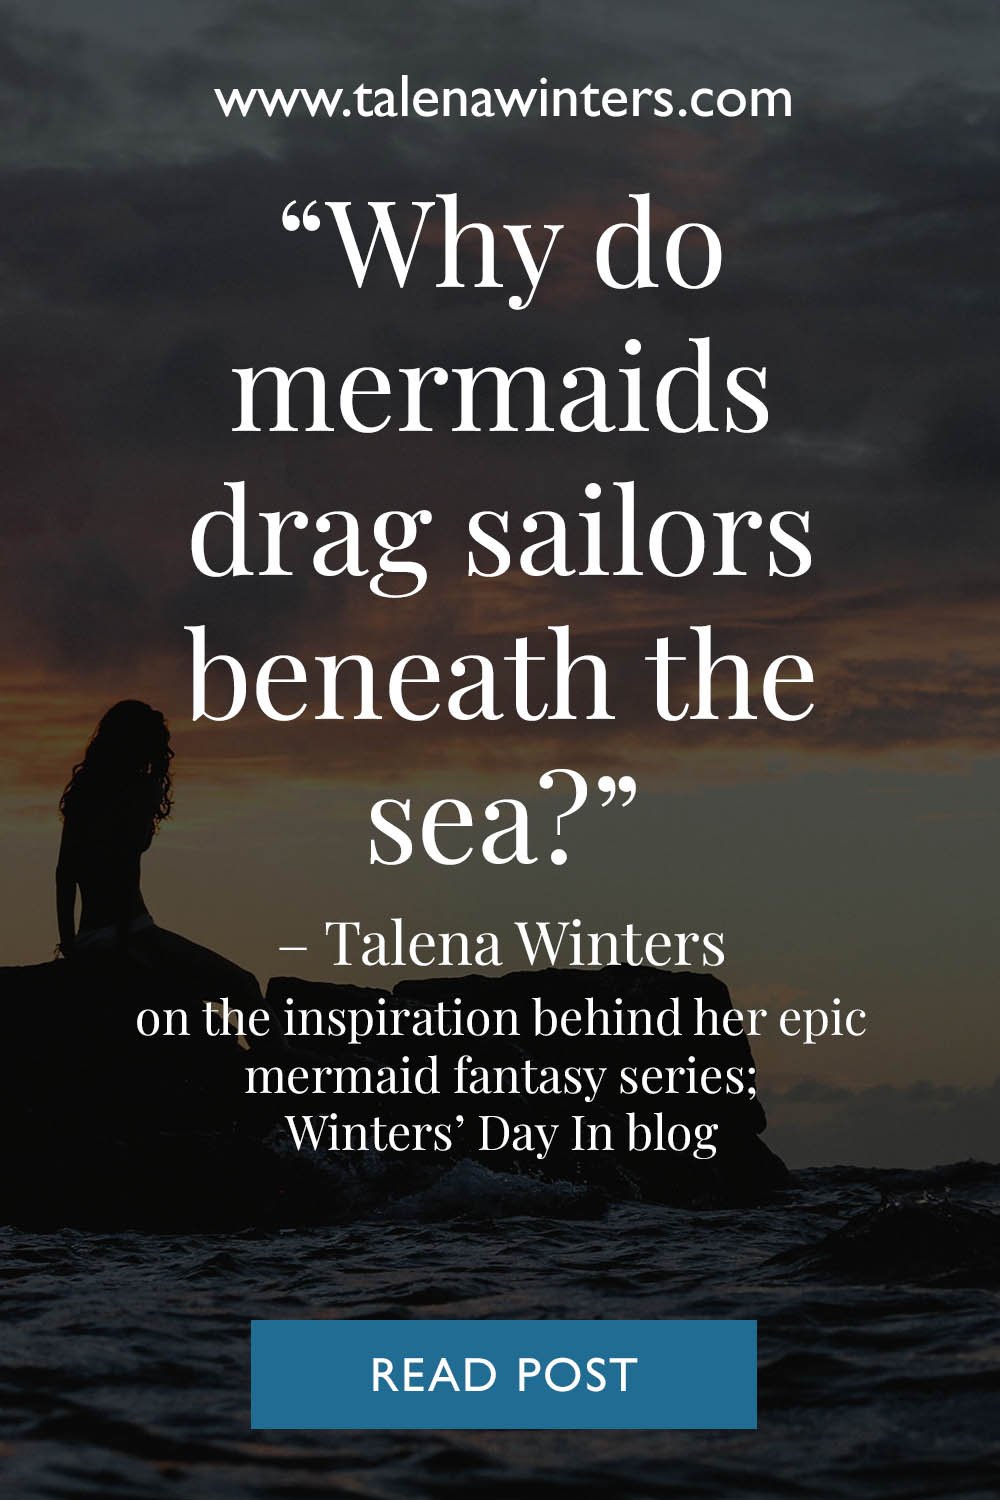 "Why do mermaids drag sailors beneath the sea?"